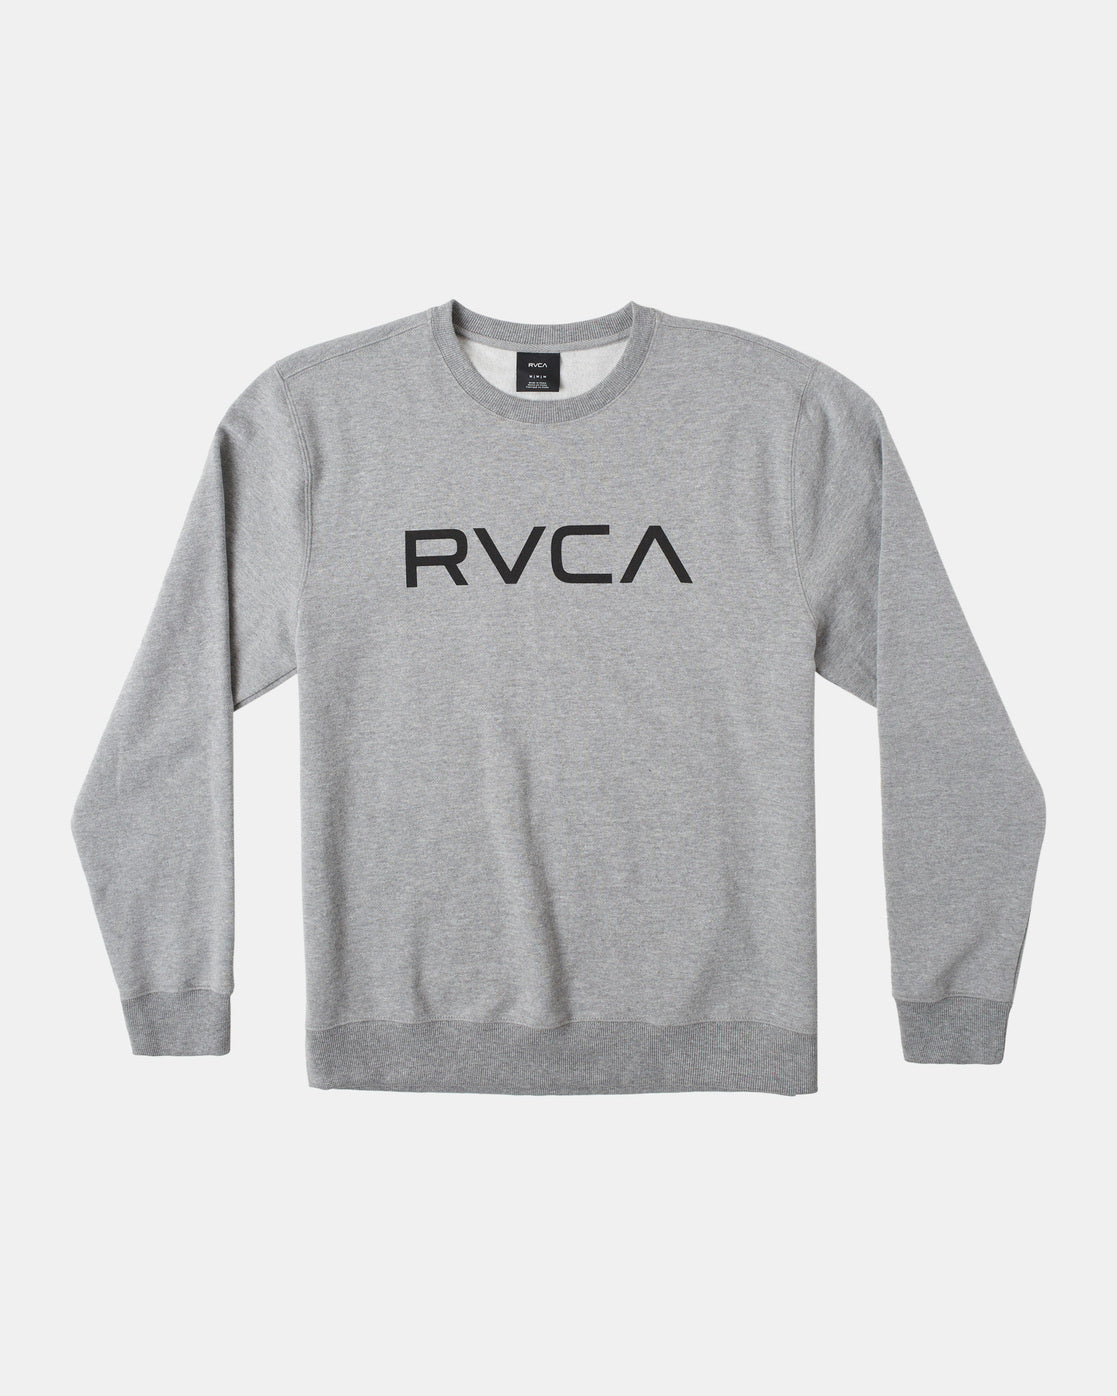 Big Rvca Crewneck Sweatshirt - Athletic Heather